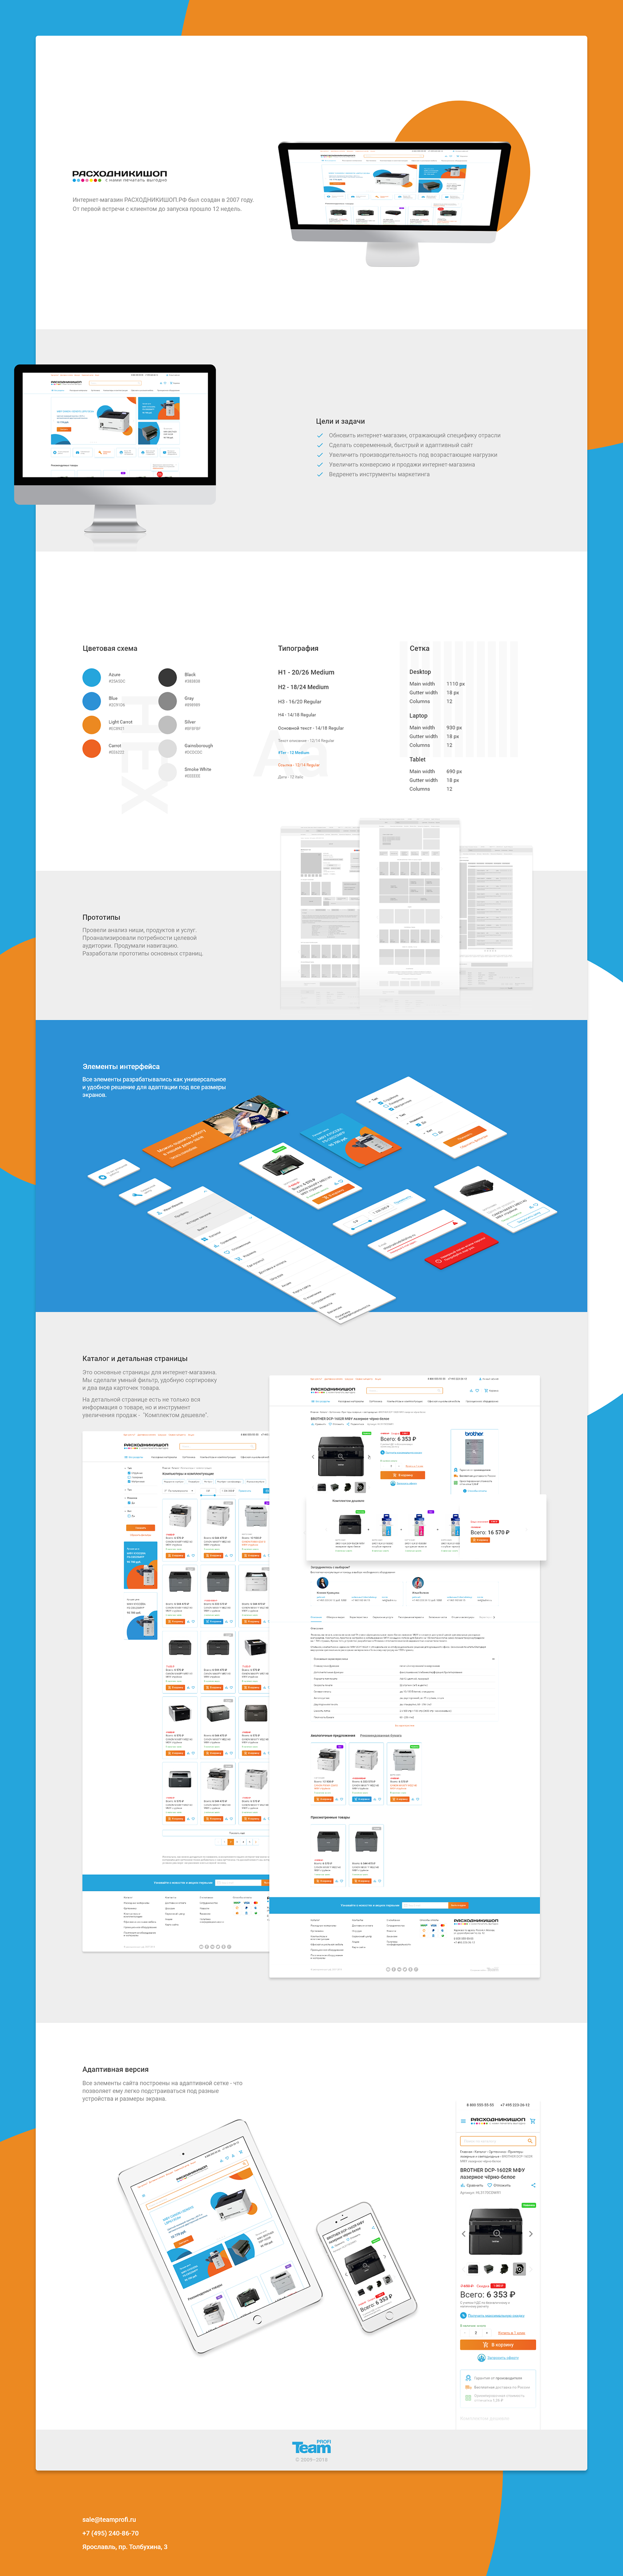 1c Битрикс разработка Веб дизайн интернет-магазин интеграции